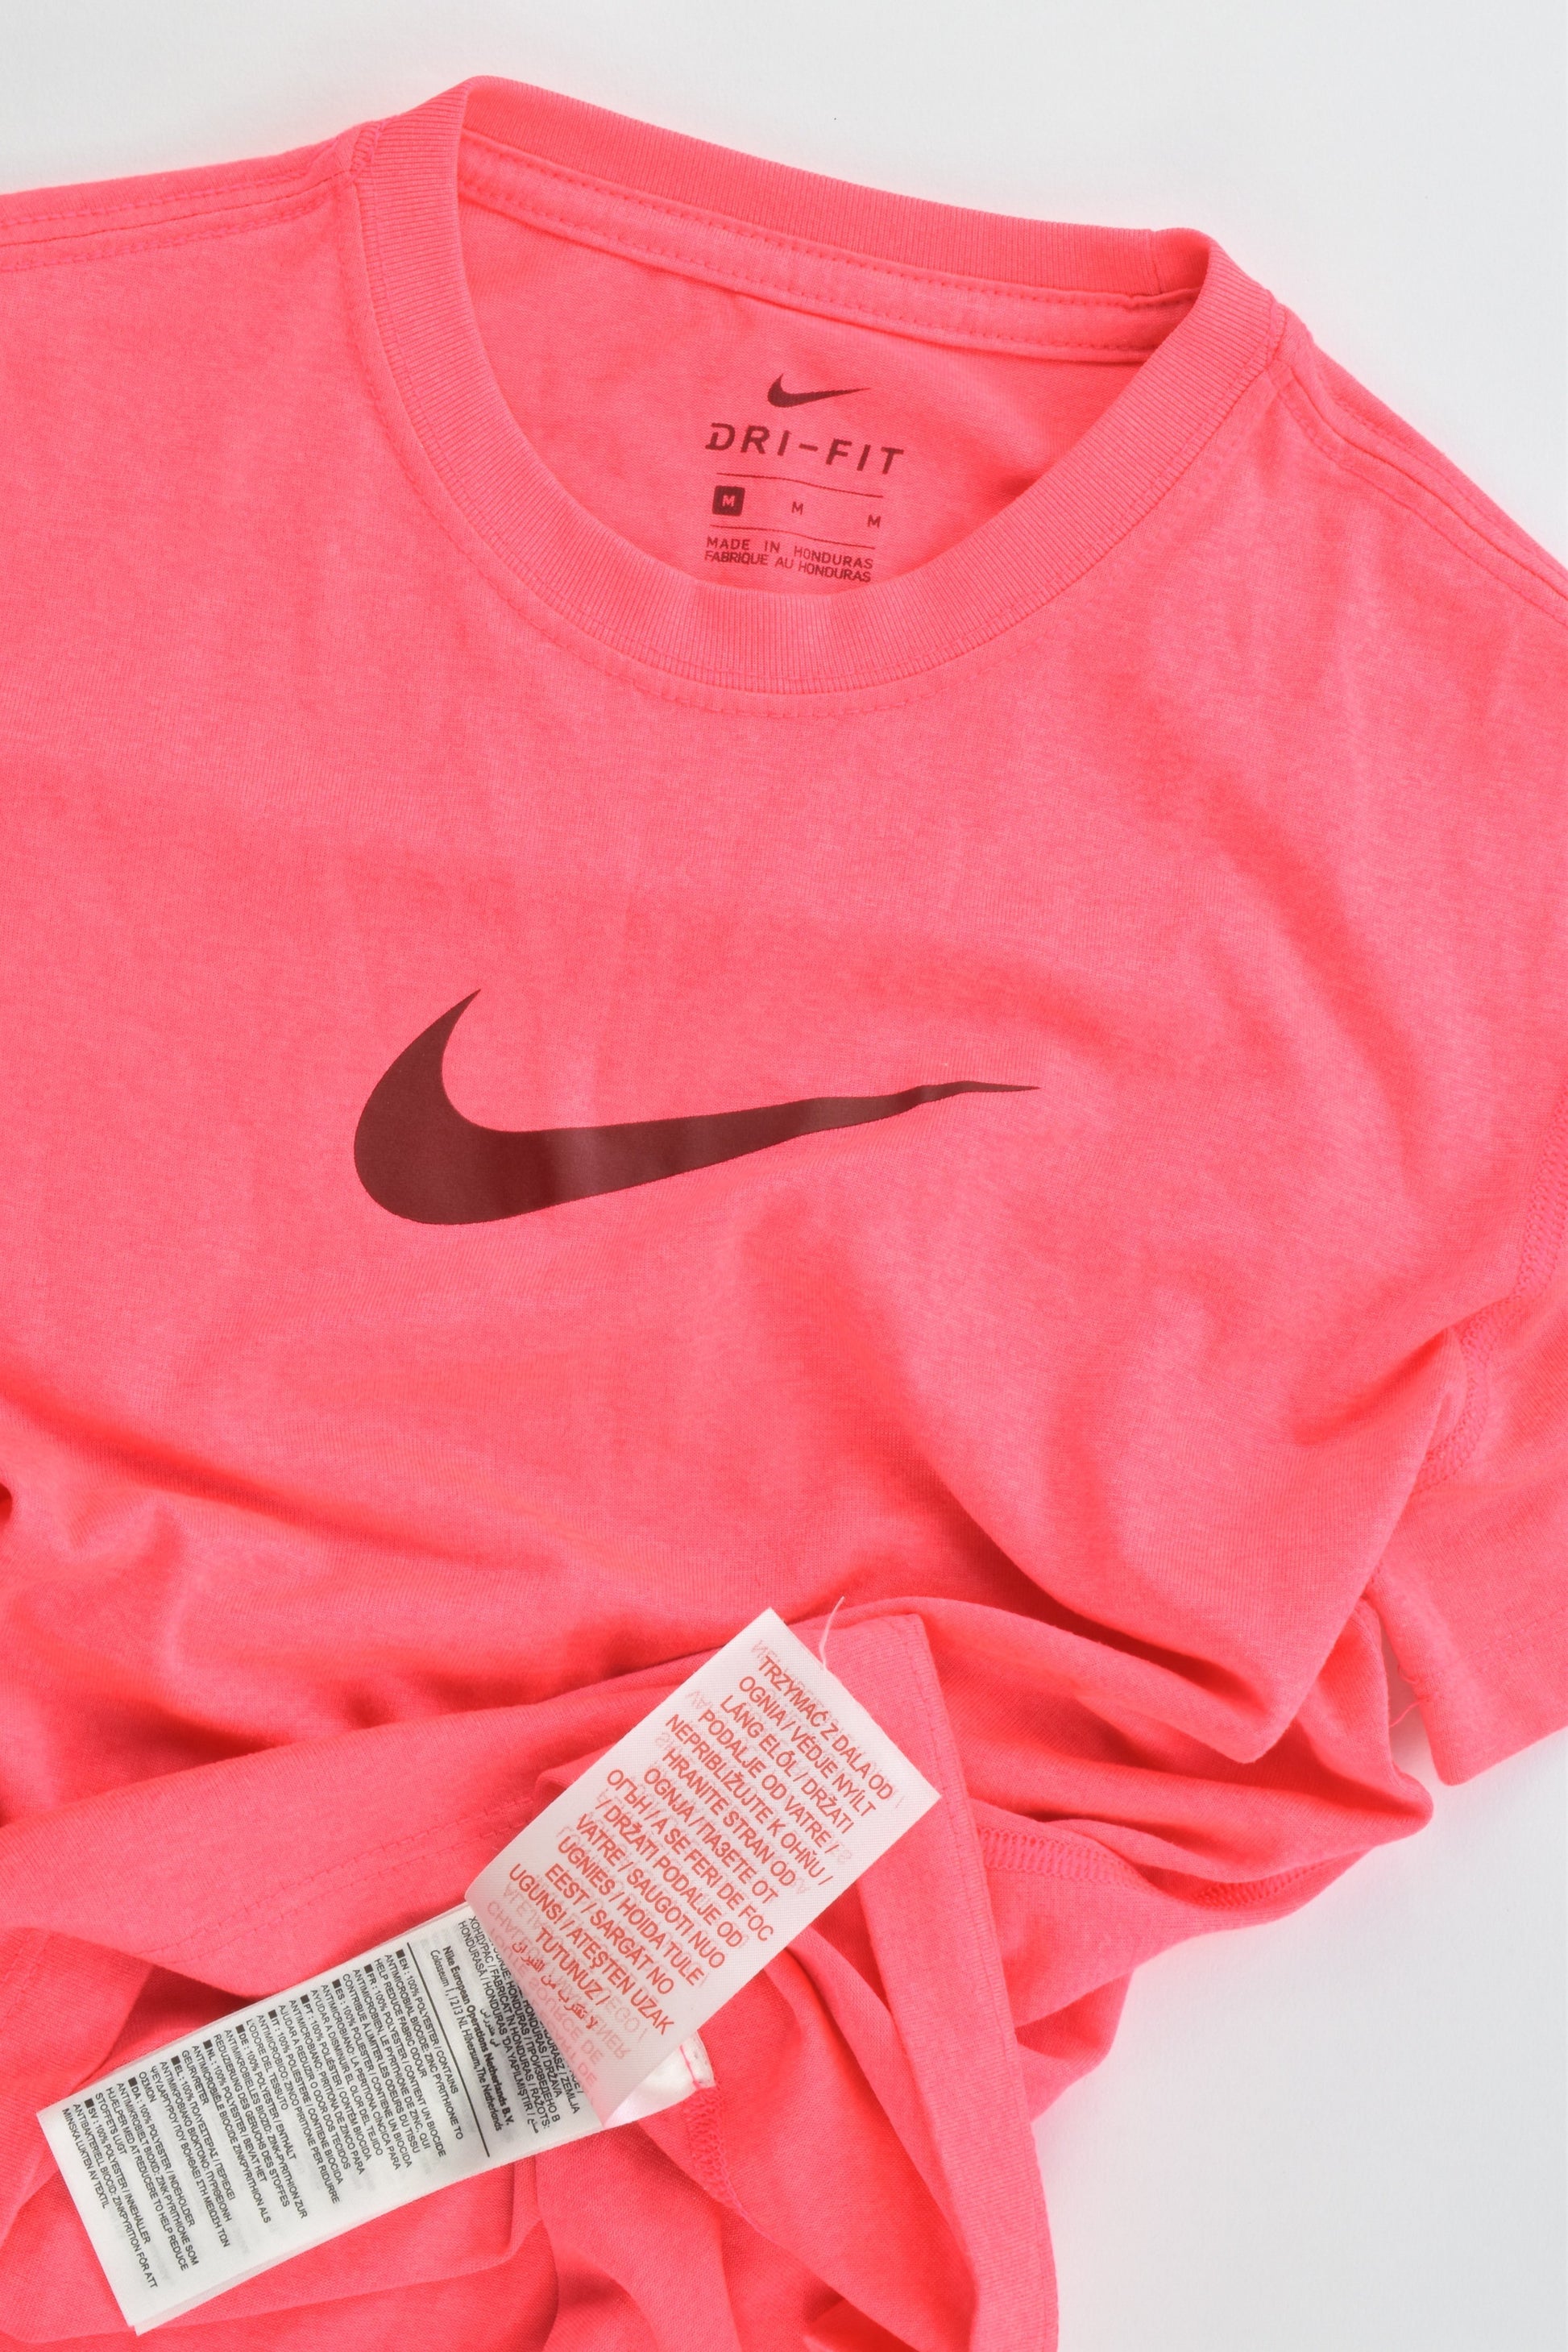 Nike Size M (10-12 years) Dri-Fit T-shirt